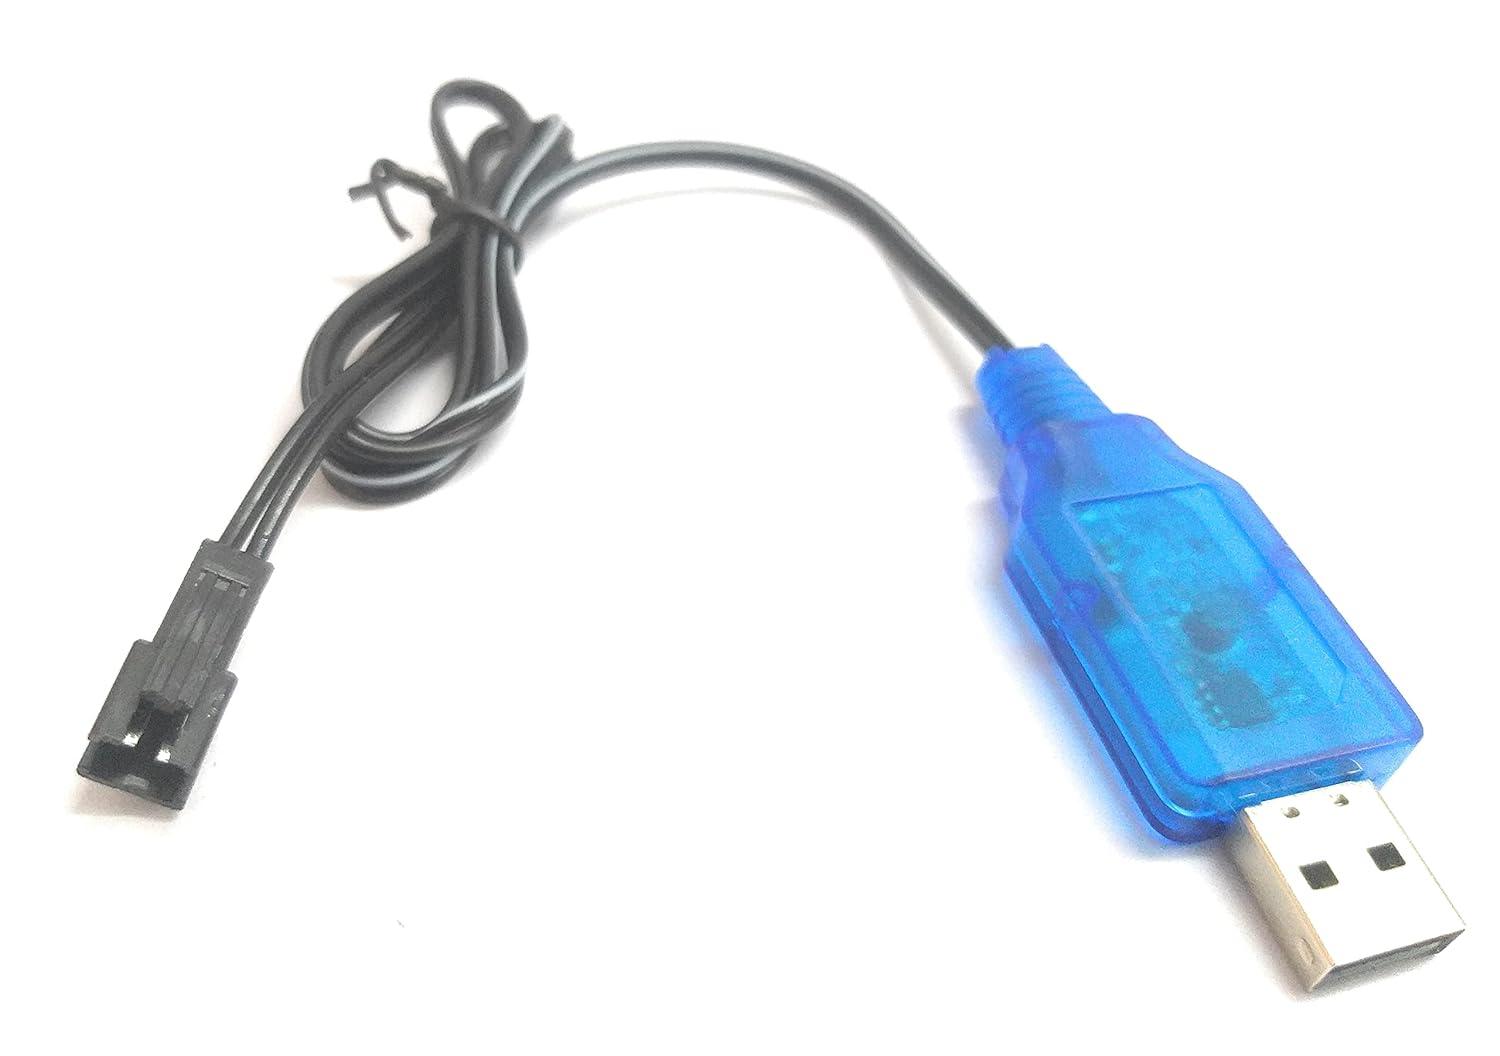 PATOYS | MICROUSB L6.2-2P USB Power Charging Cable for RC Car 4.8V 250mA - PATOYS